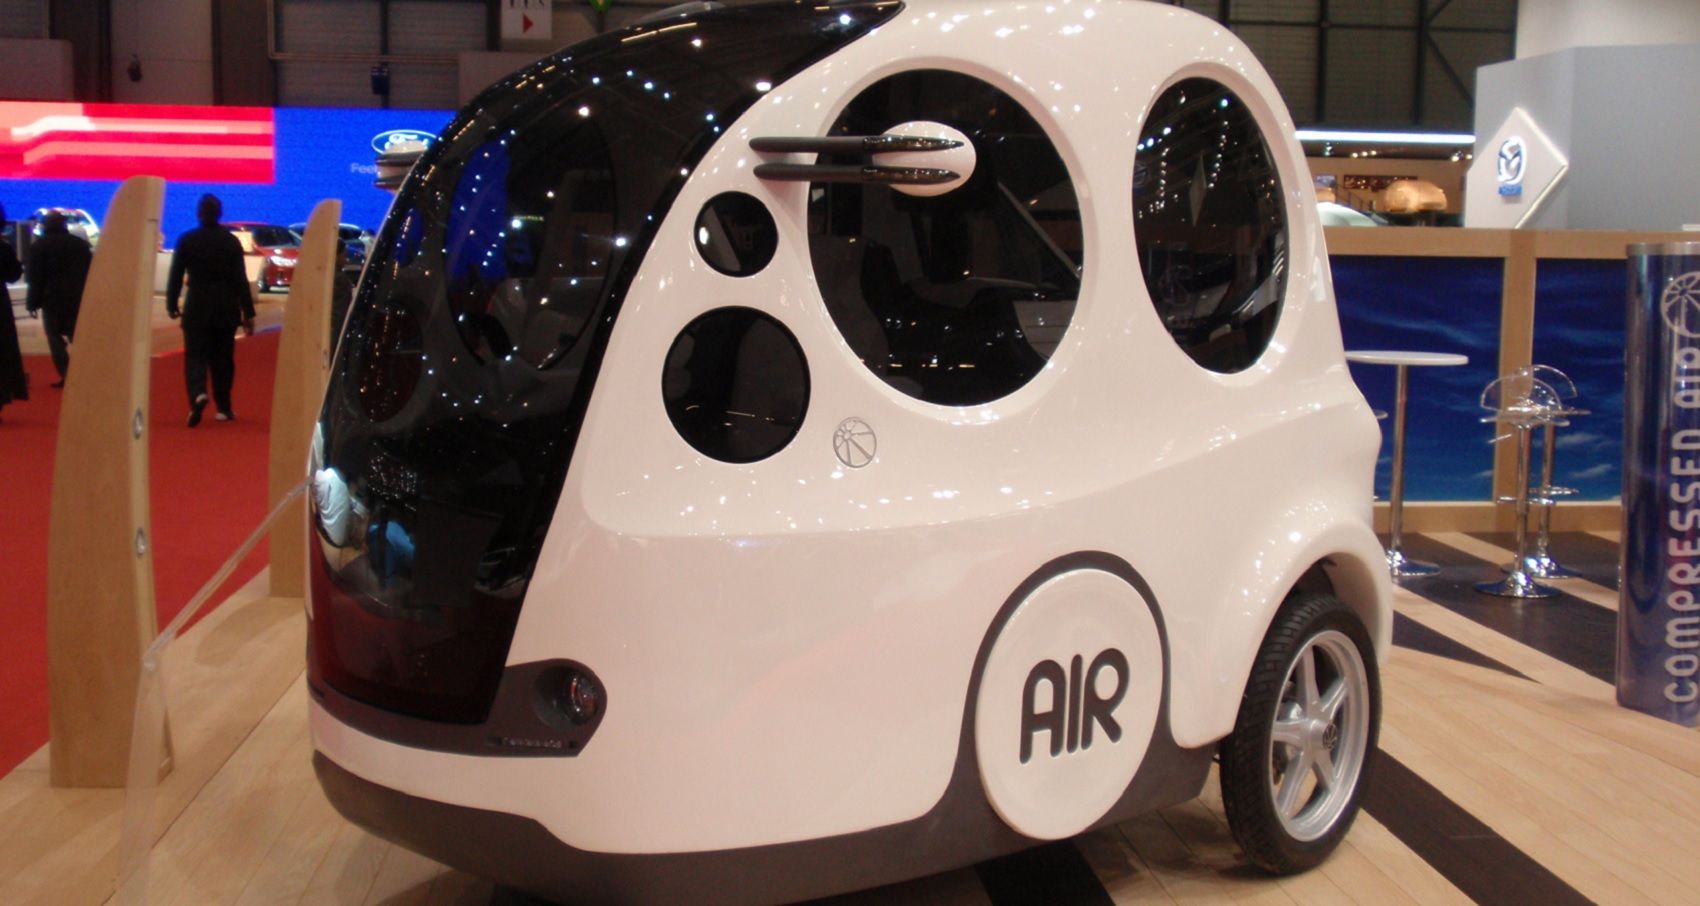 The Compressed Air Car Airpod